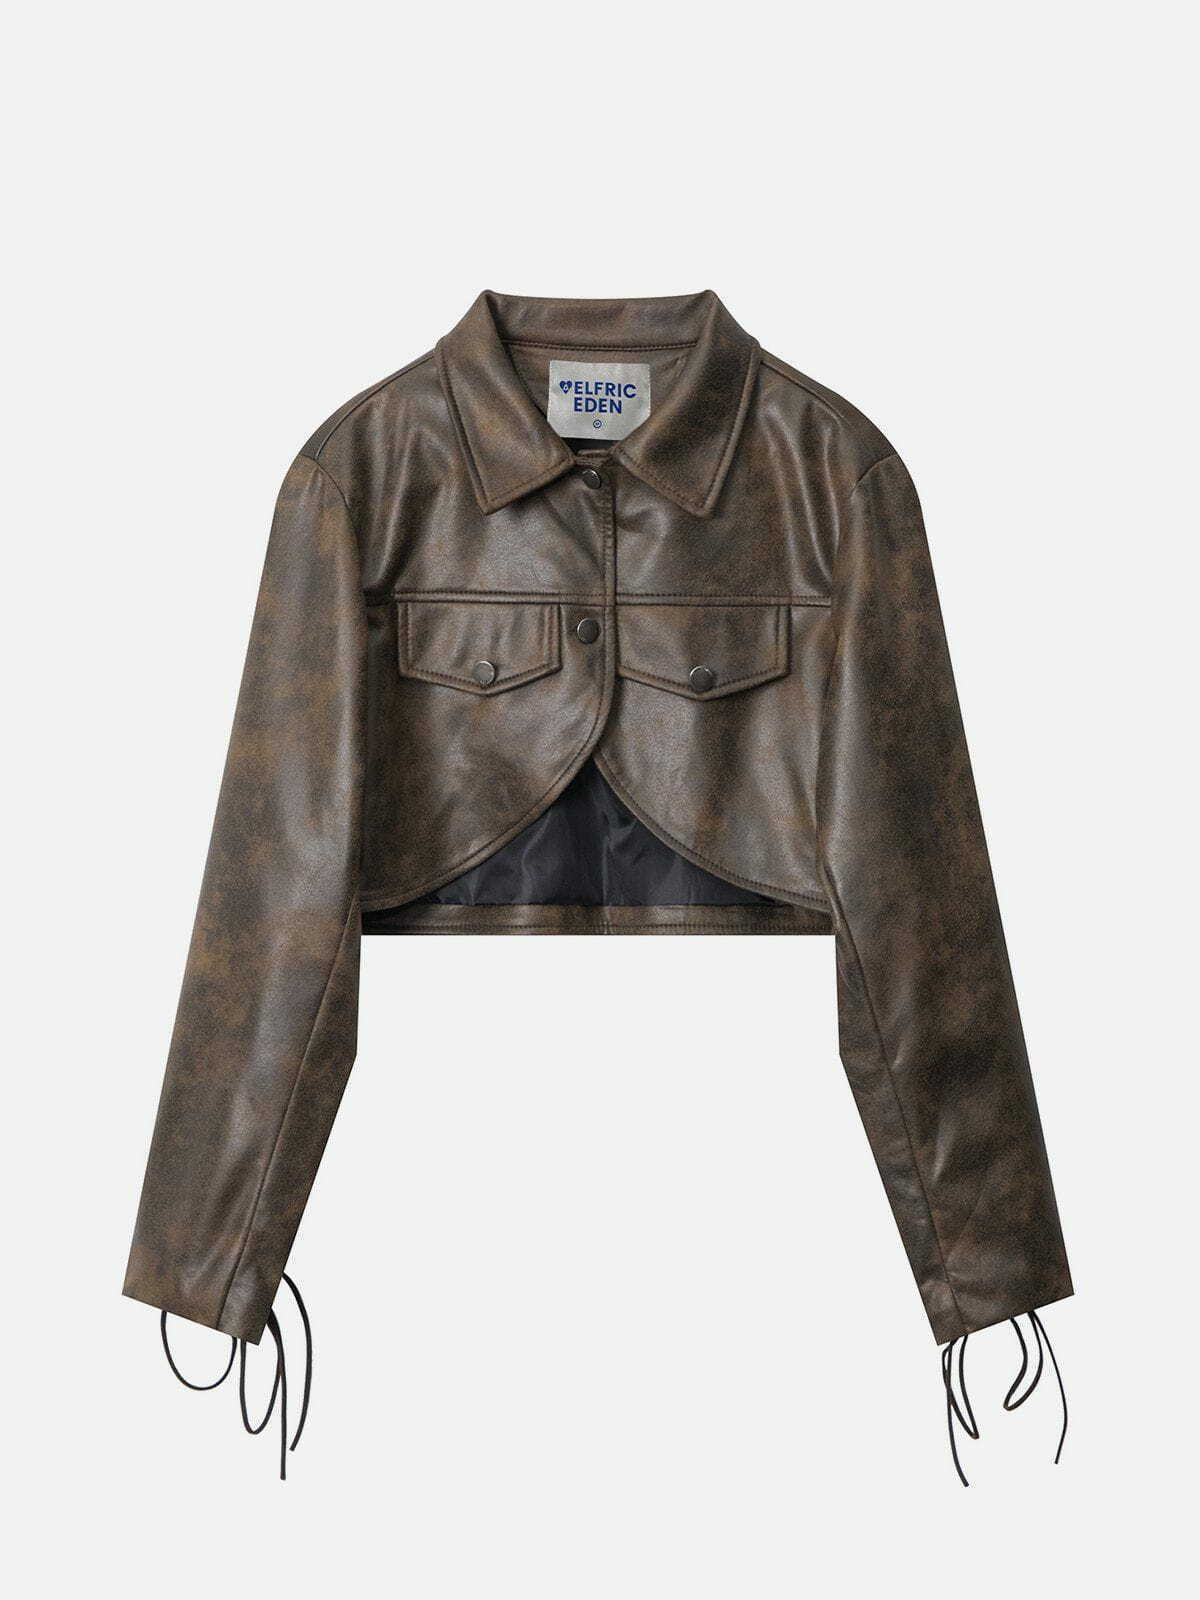 vibrant camouflage faux leather jacket urban streetwear 8022